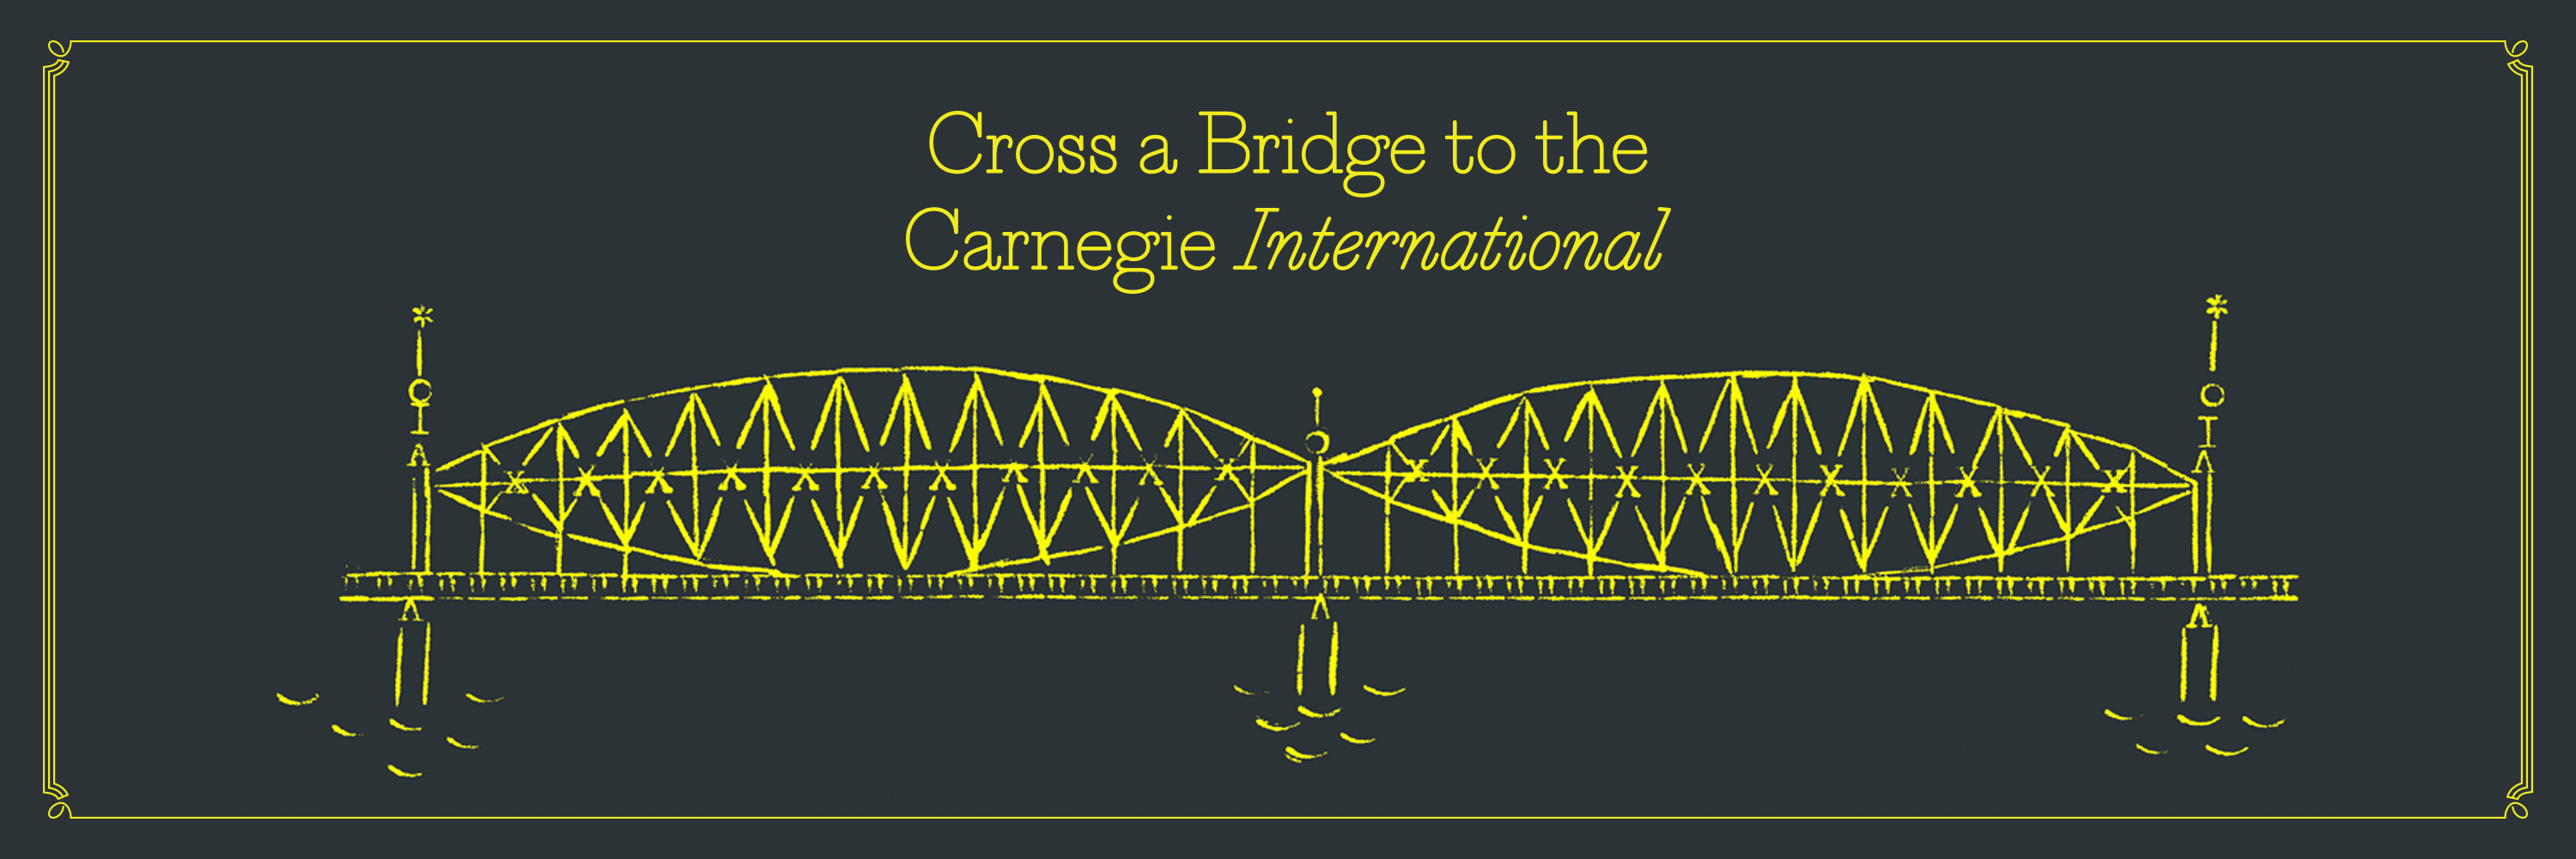 Cross a Bridge to the Carnegie International